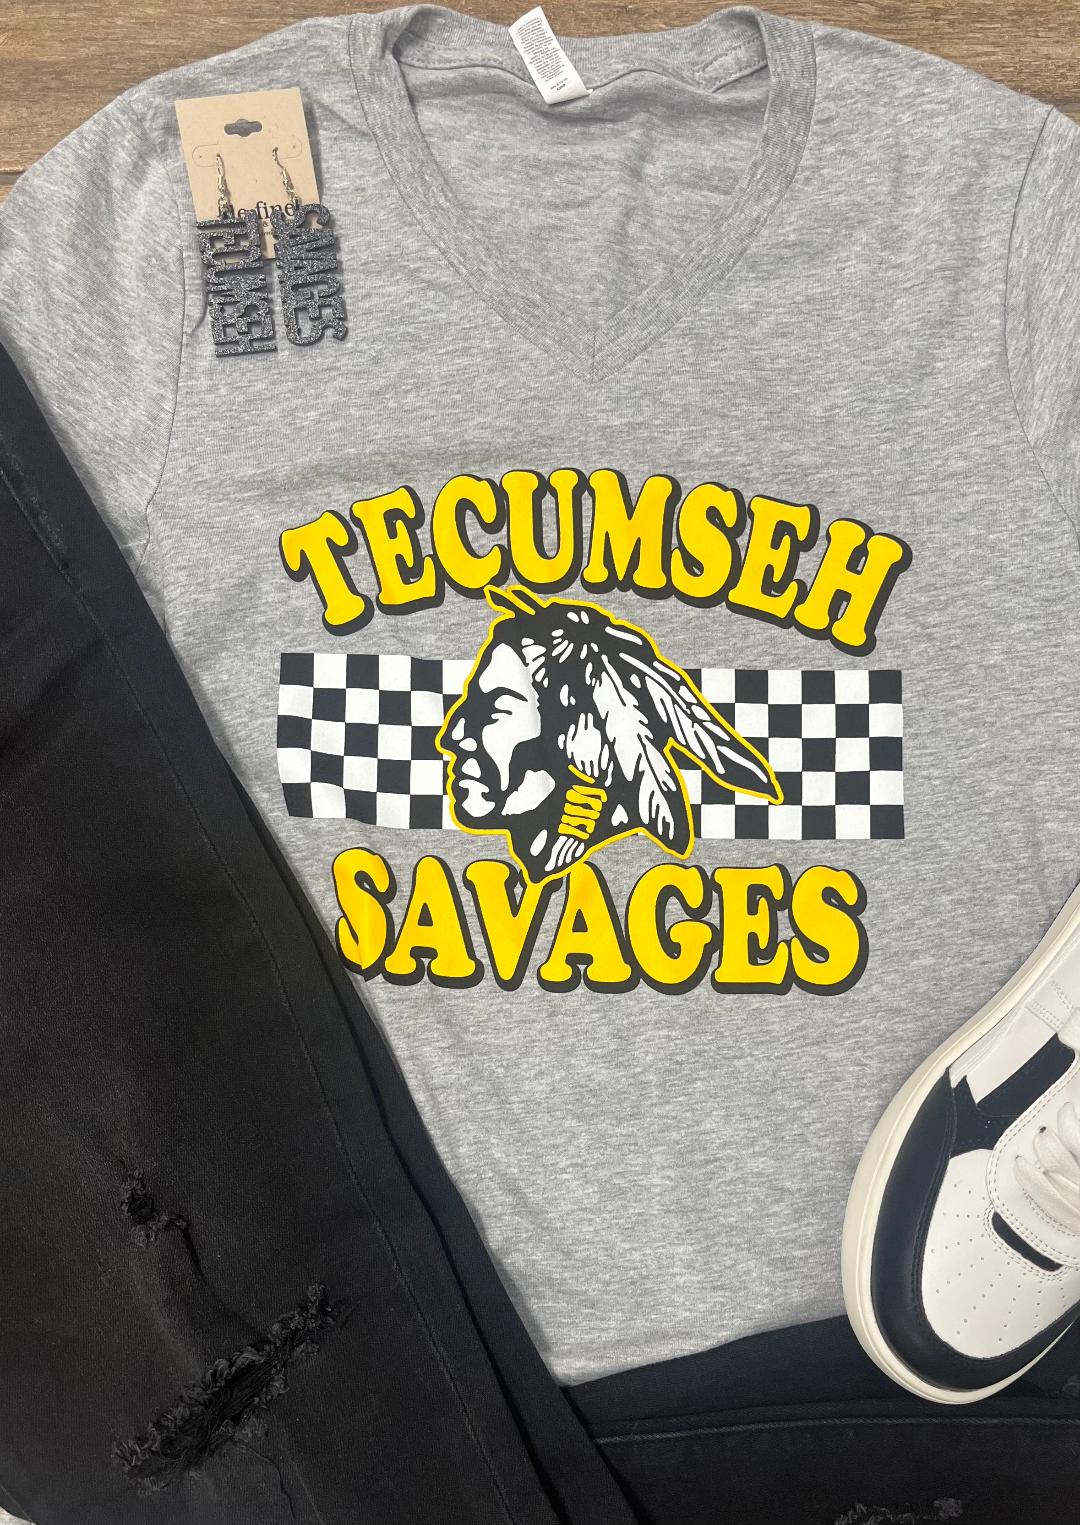 Tecumseh Savages Checkered Stripe Graphic Tee